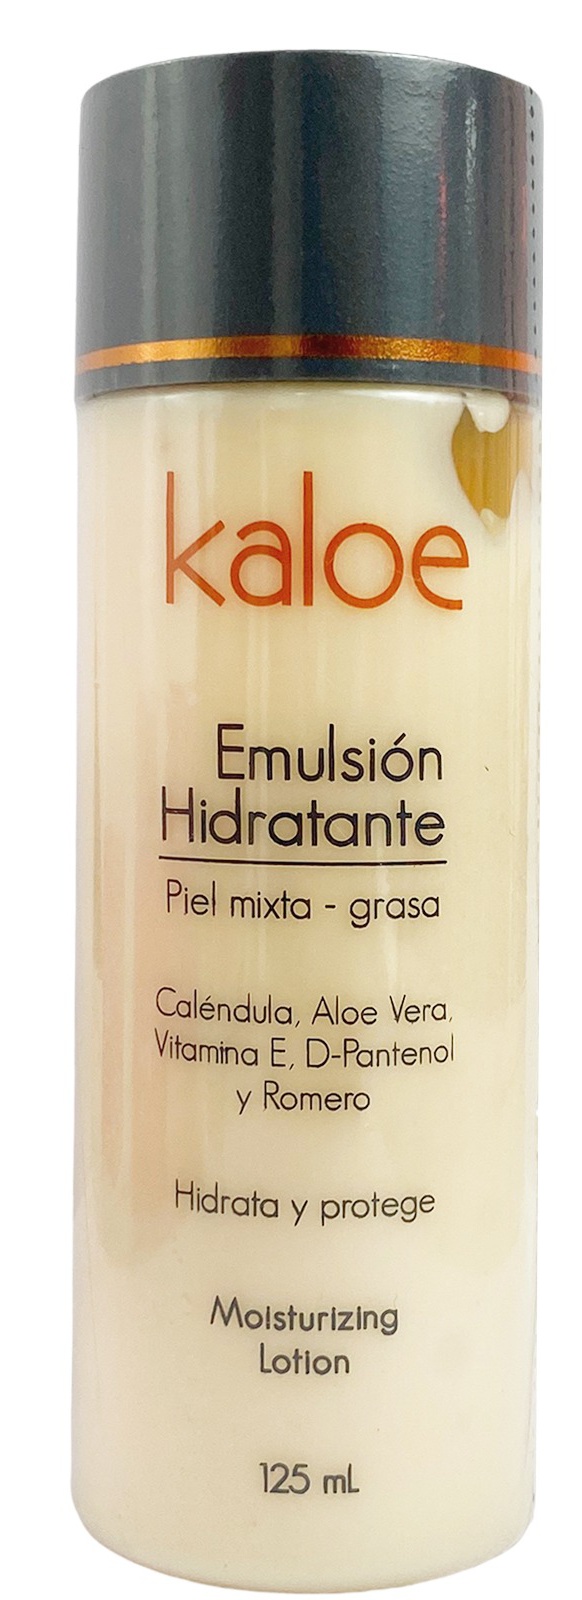 Kaloe Emulsion Hidratante. Piel Mixta-grasa